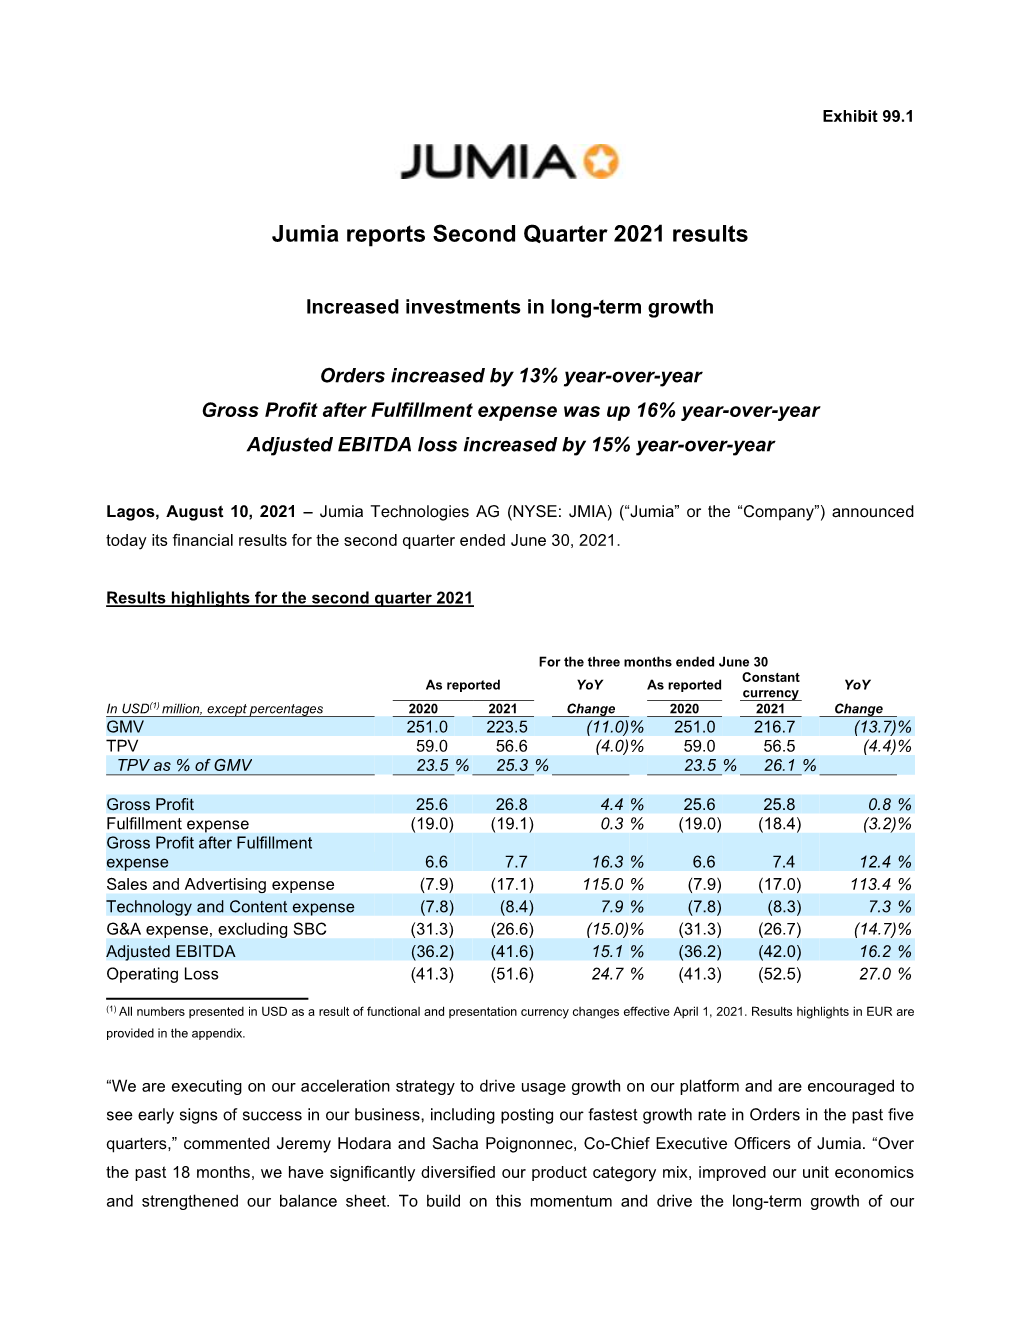 Jumia Reports Second Quarter 2021 Results